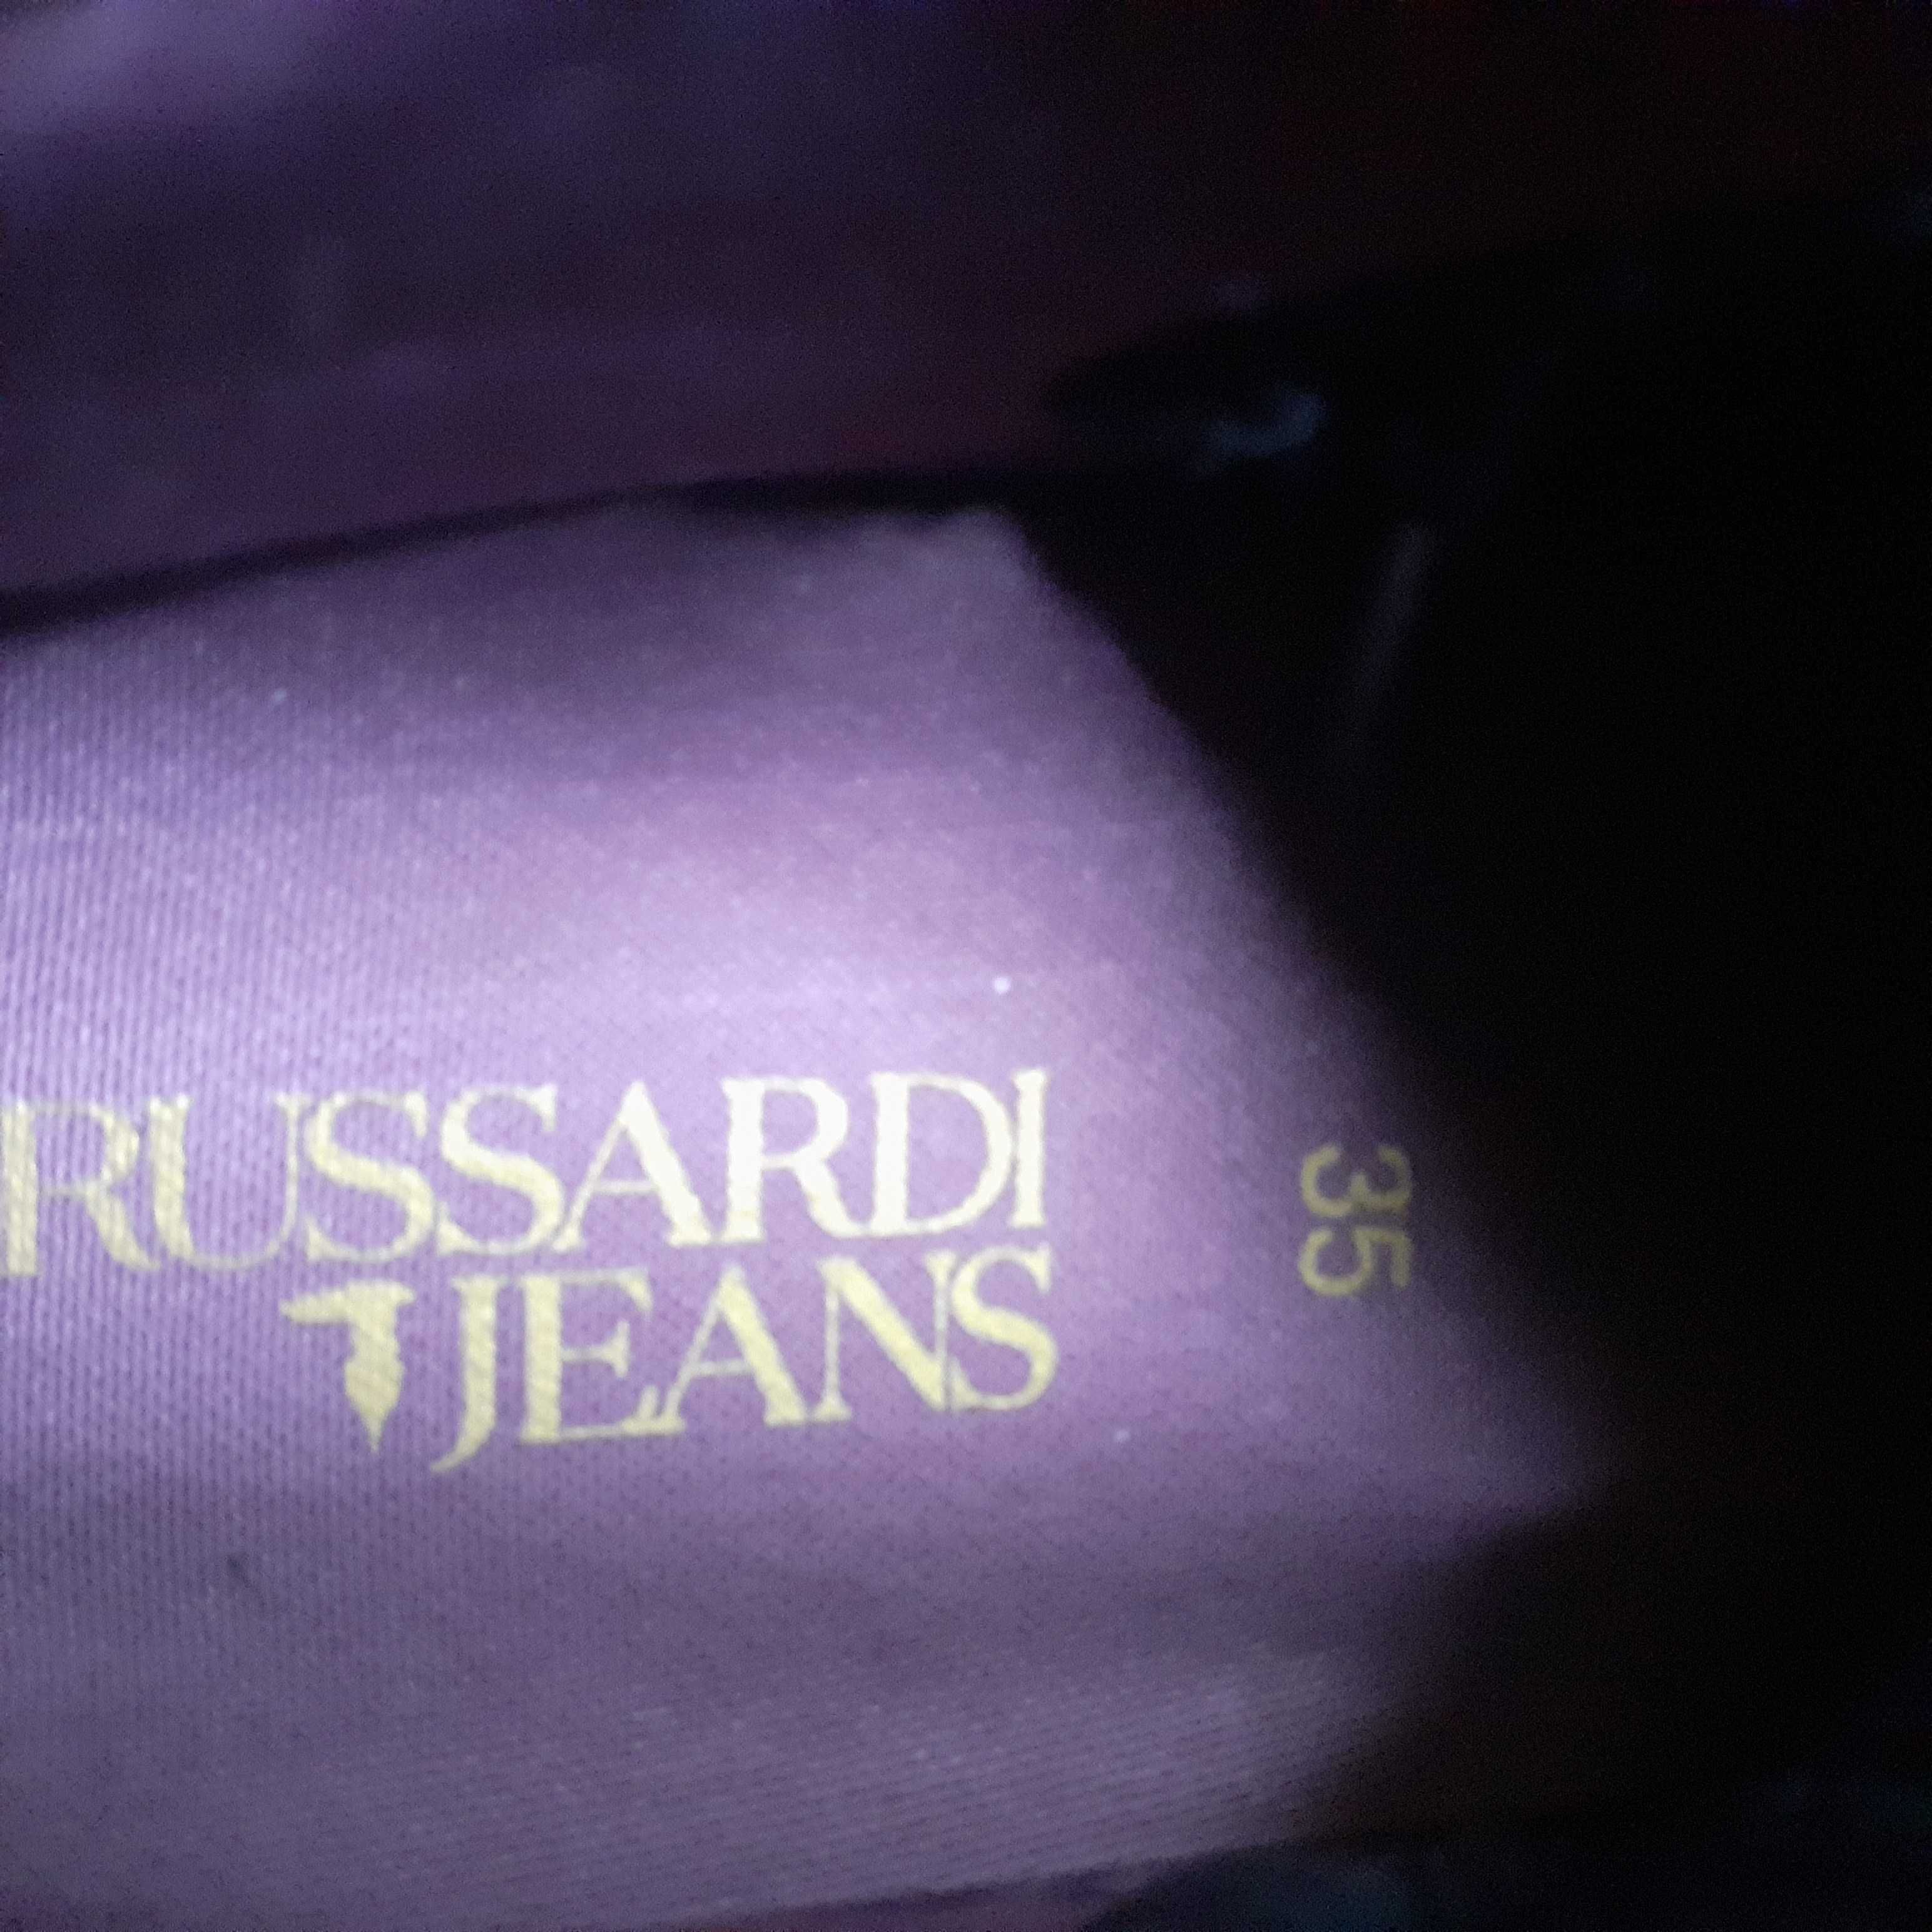 Vand adidasi dama Trussardi Jeans, marimea 35, pret 110 lei